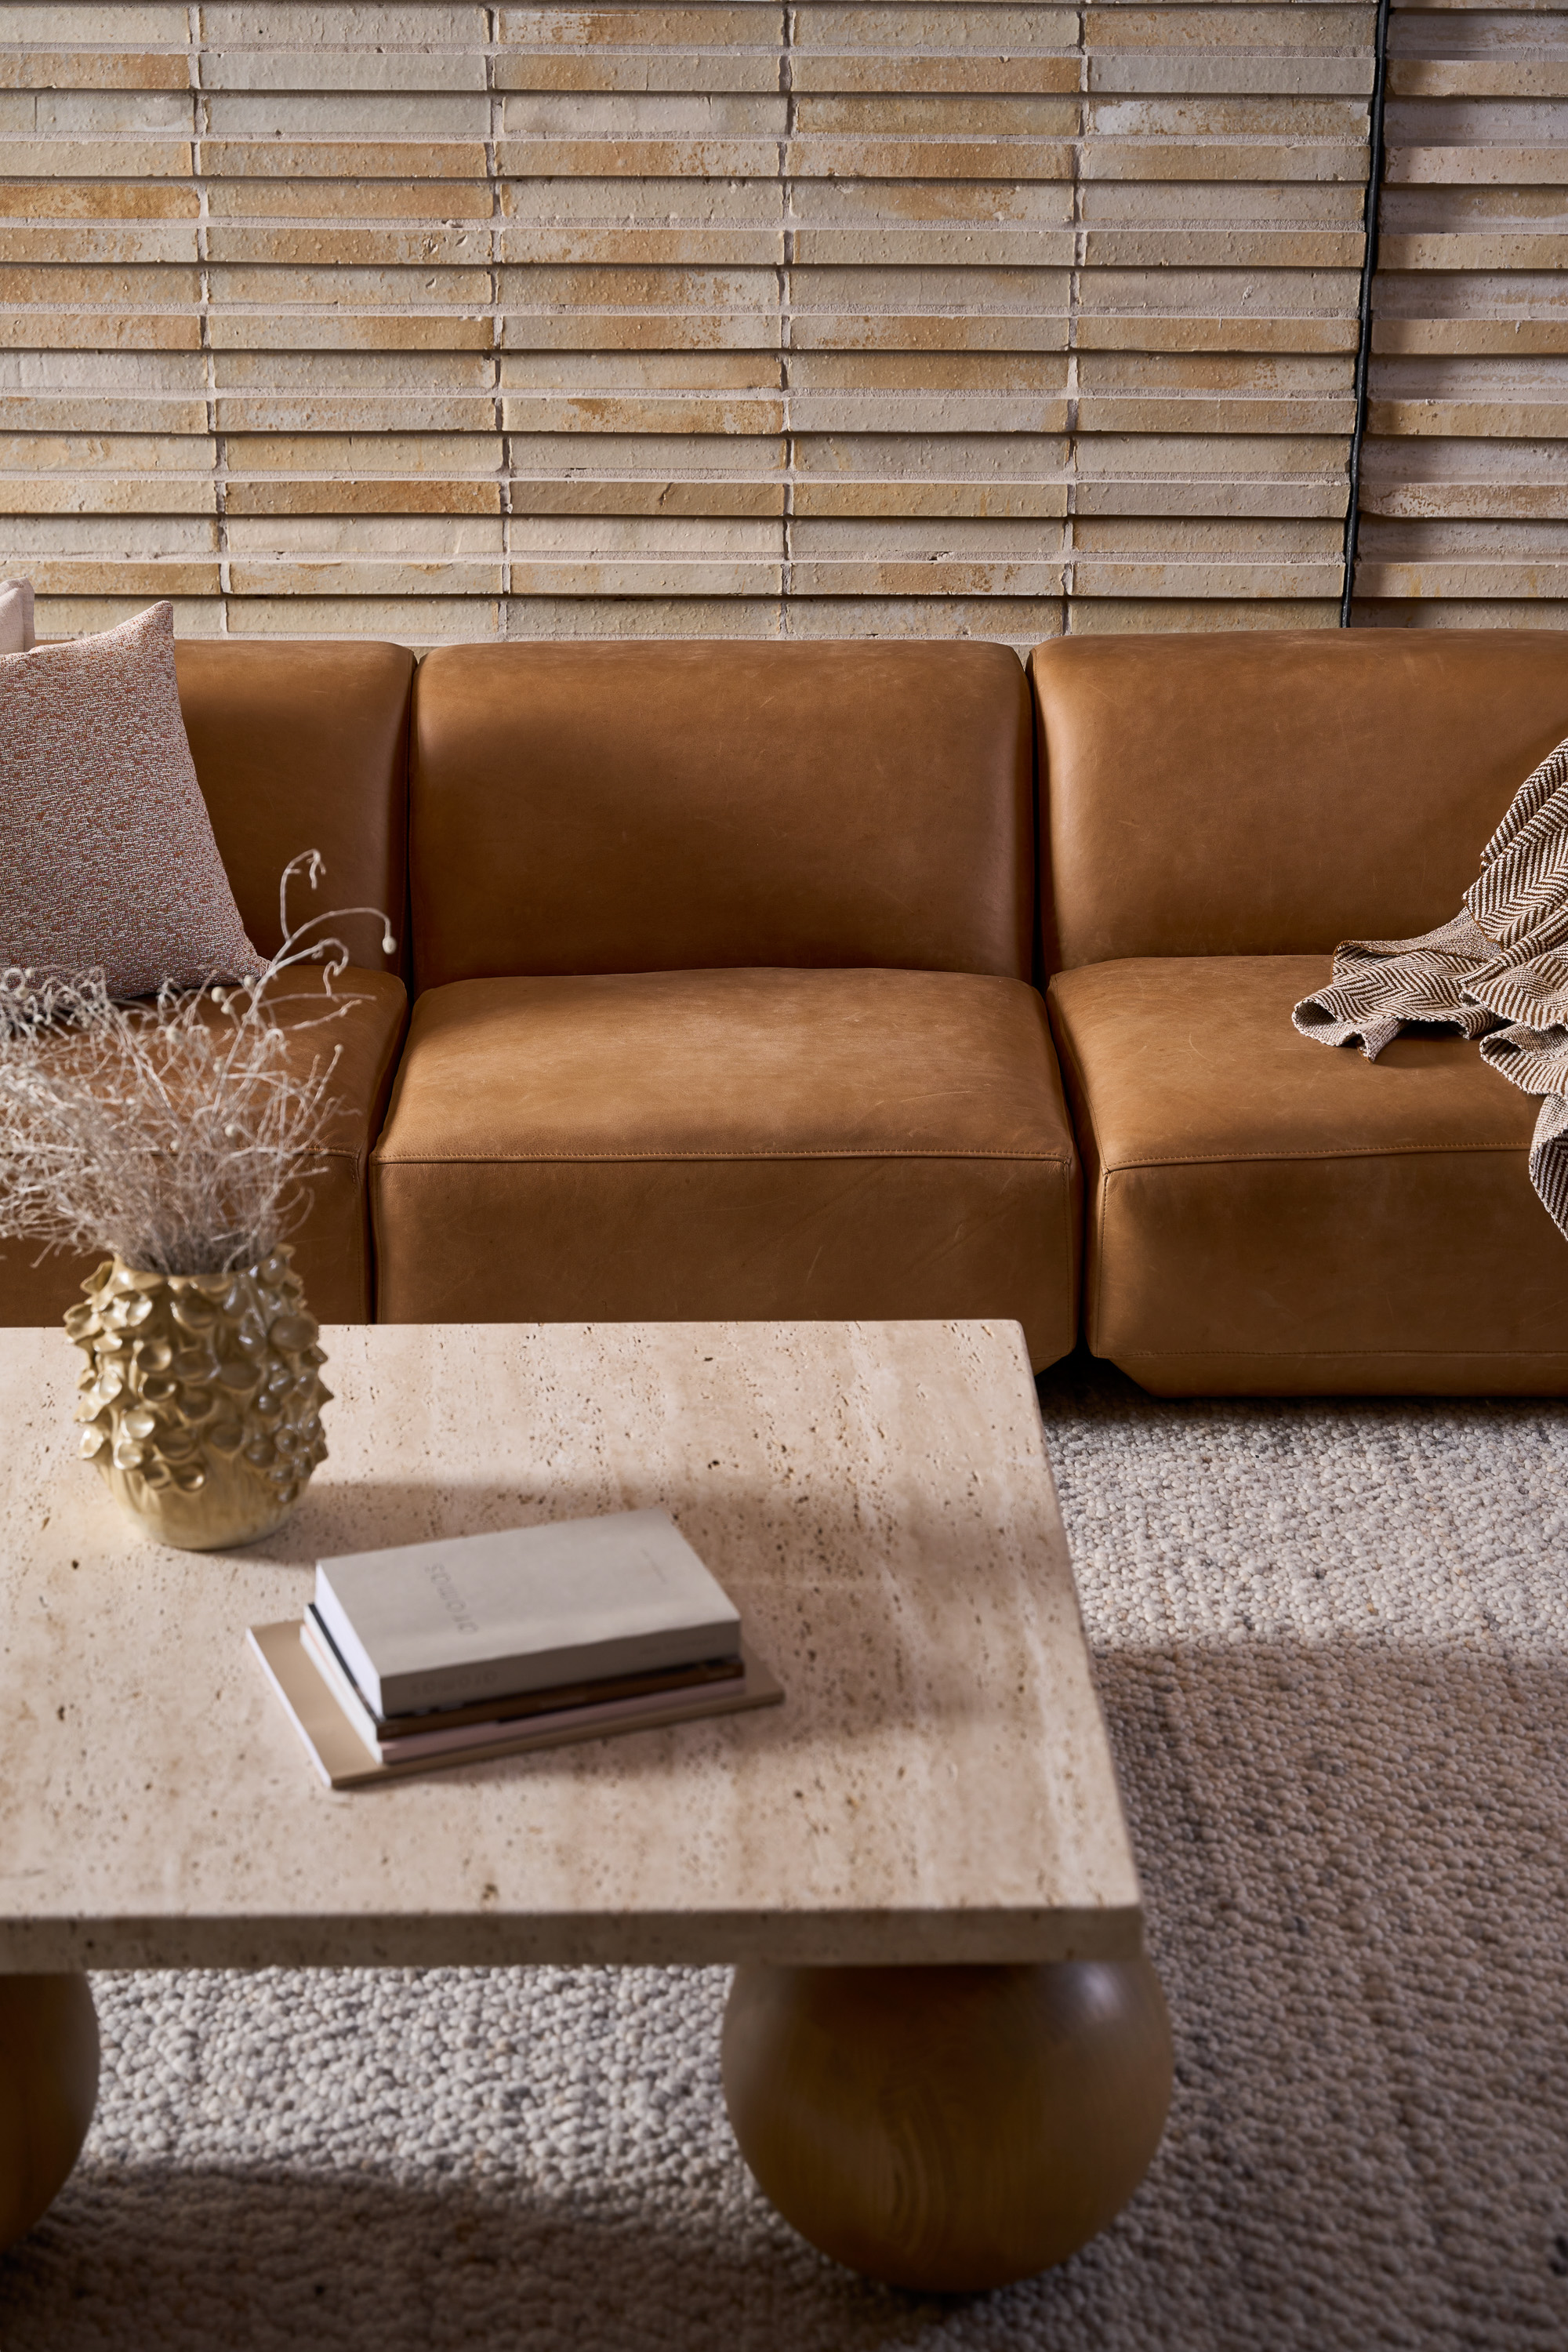 Nathan Modular Premium Leather Sofa for Media Rooms